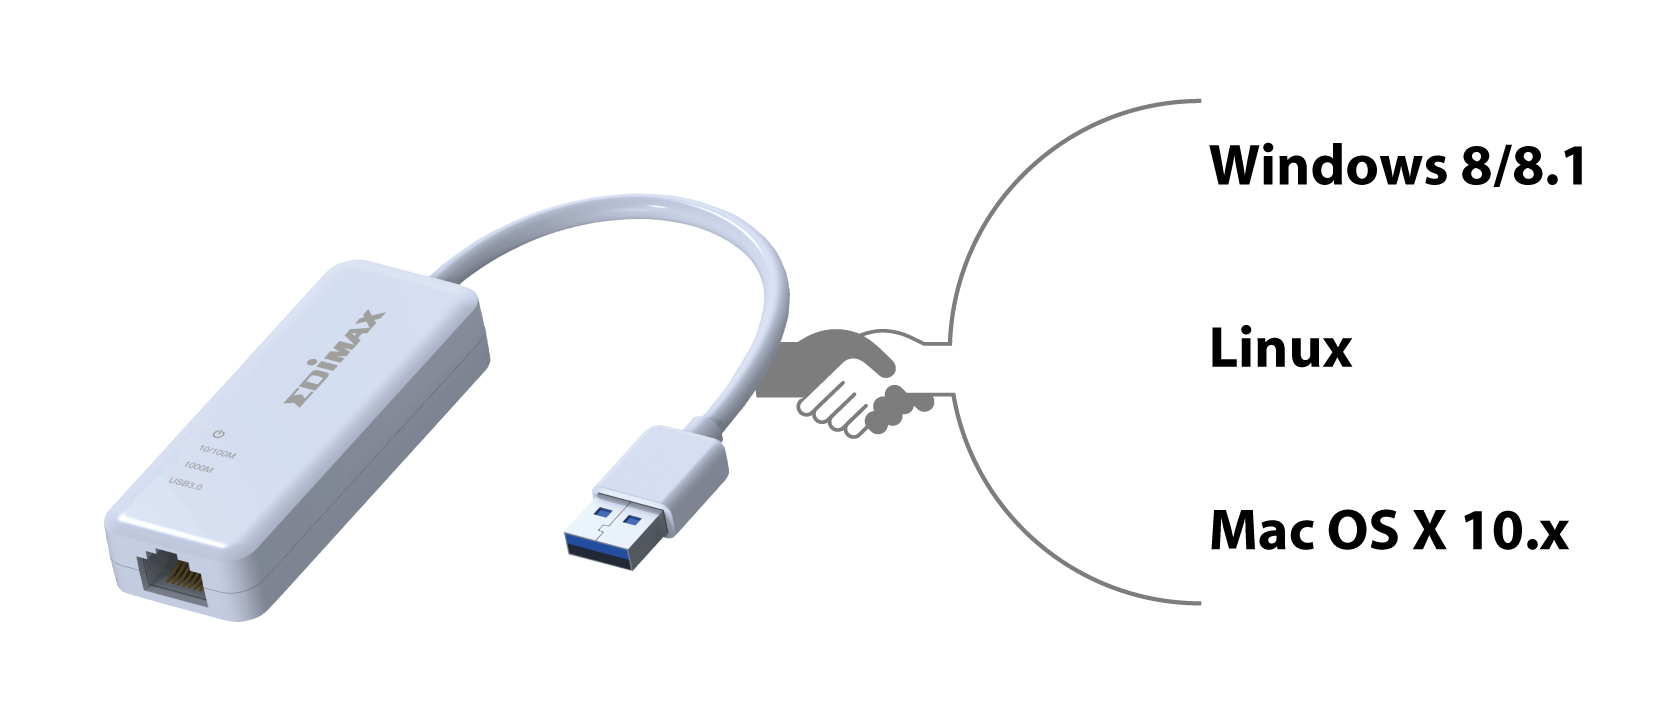 Edimax USB3.0 Gigabit Ethernet Adapter EU-4306_Compatible_win8.1_Linux_Mac10.png